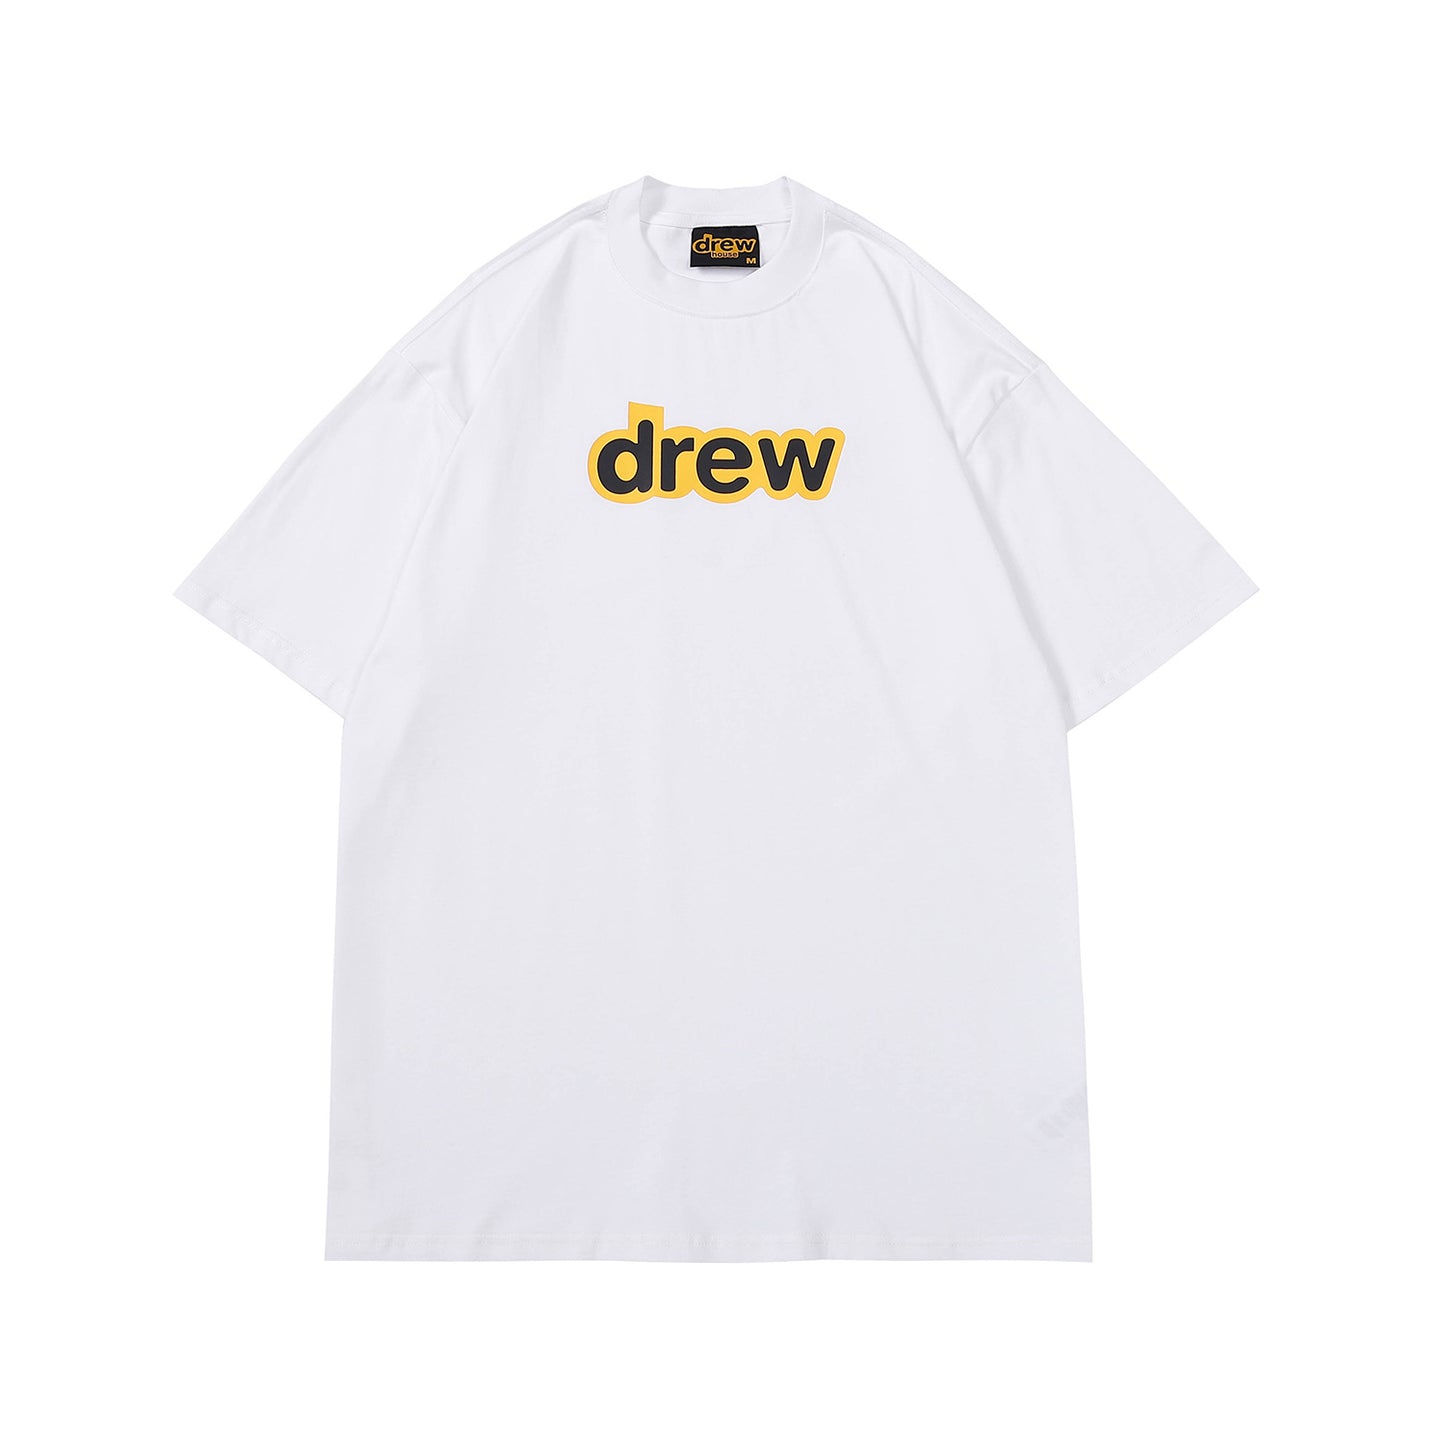 DREW Print Trend Loose Casual Unisex T-Shirt